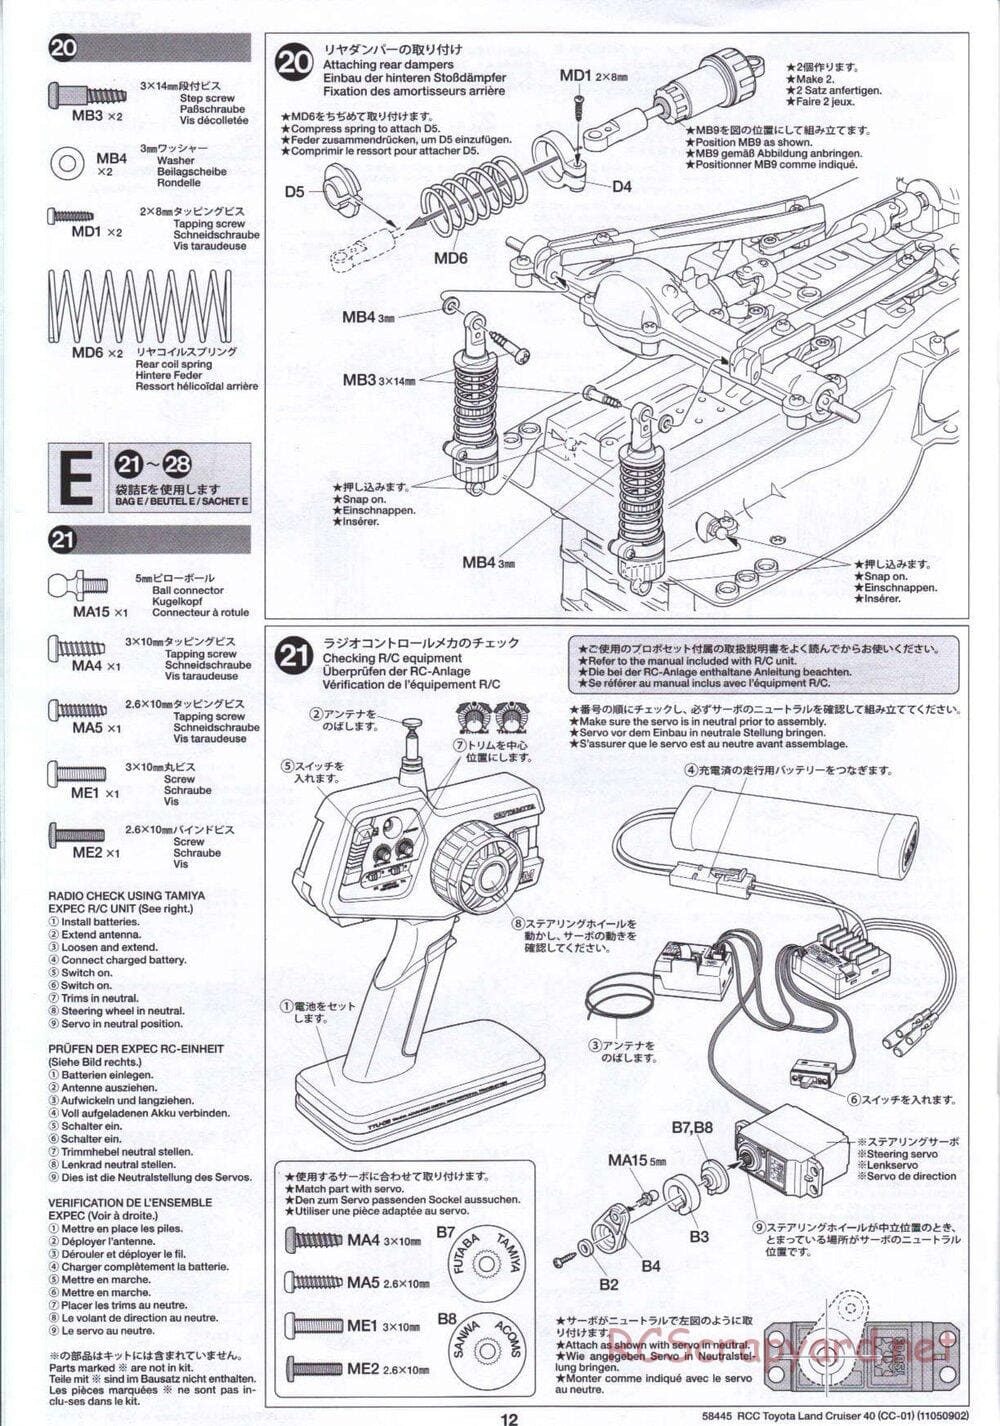 Tamiya - Toyota Land Cruiser 40 - CC-01 Chassis - Manual - Page 12